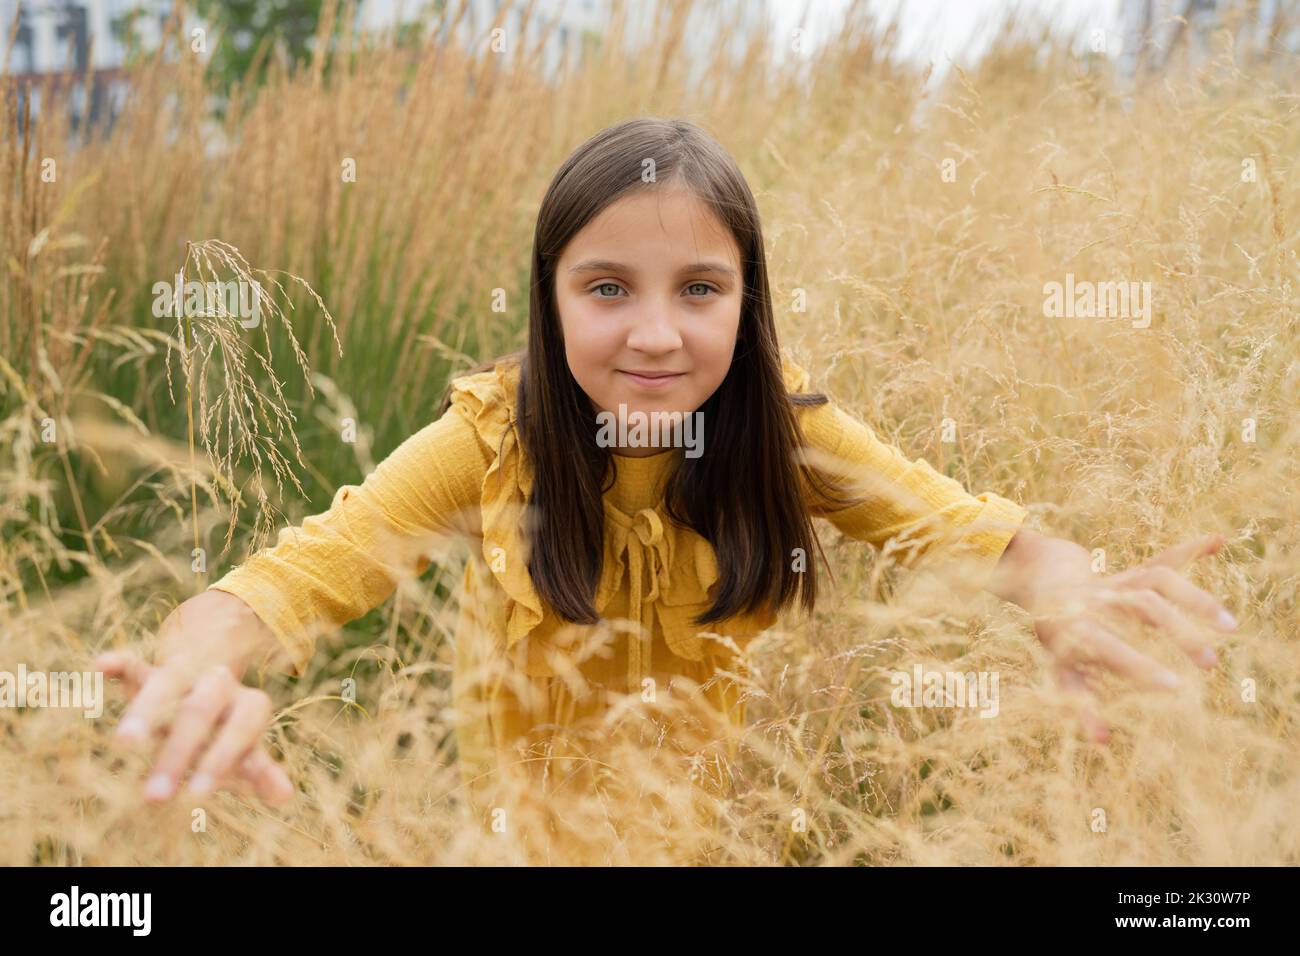 Smiling pre-adolescent girl amidst grass in field Stock Photo